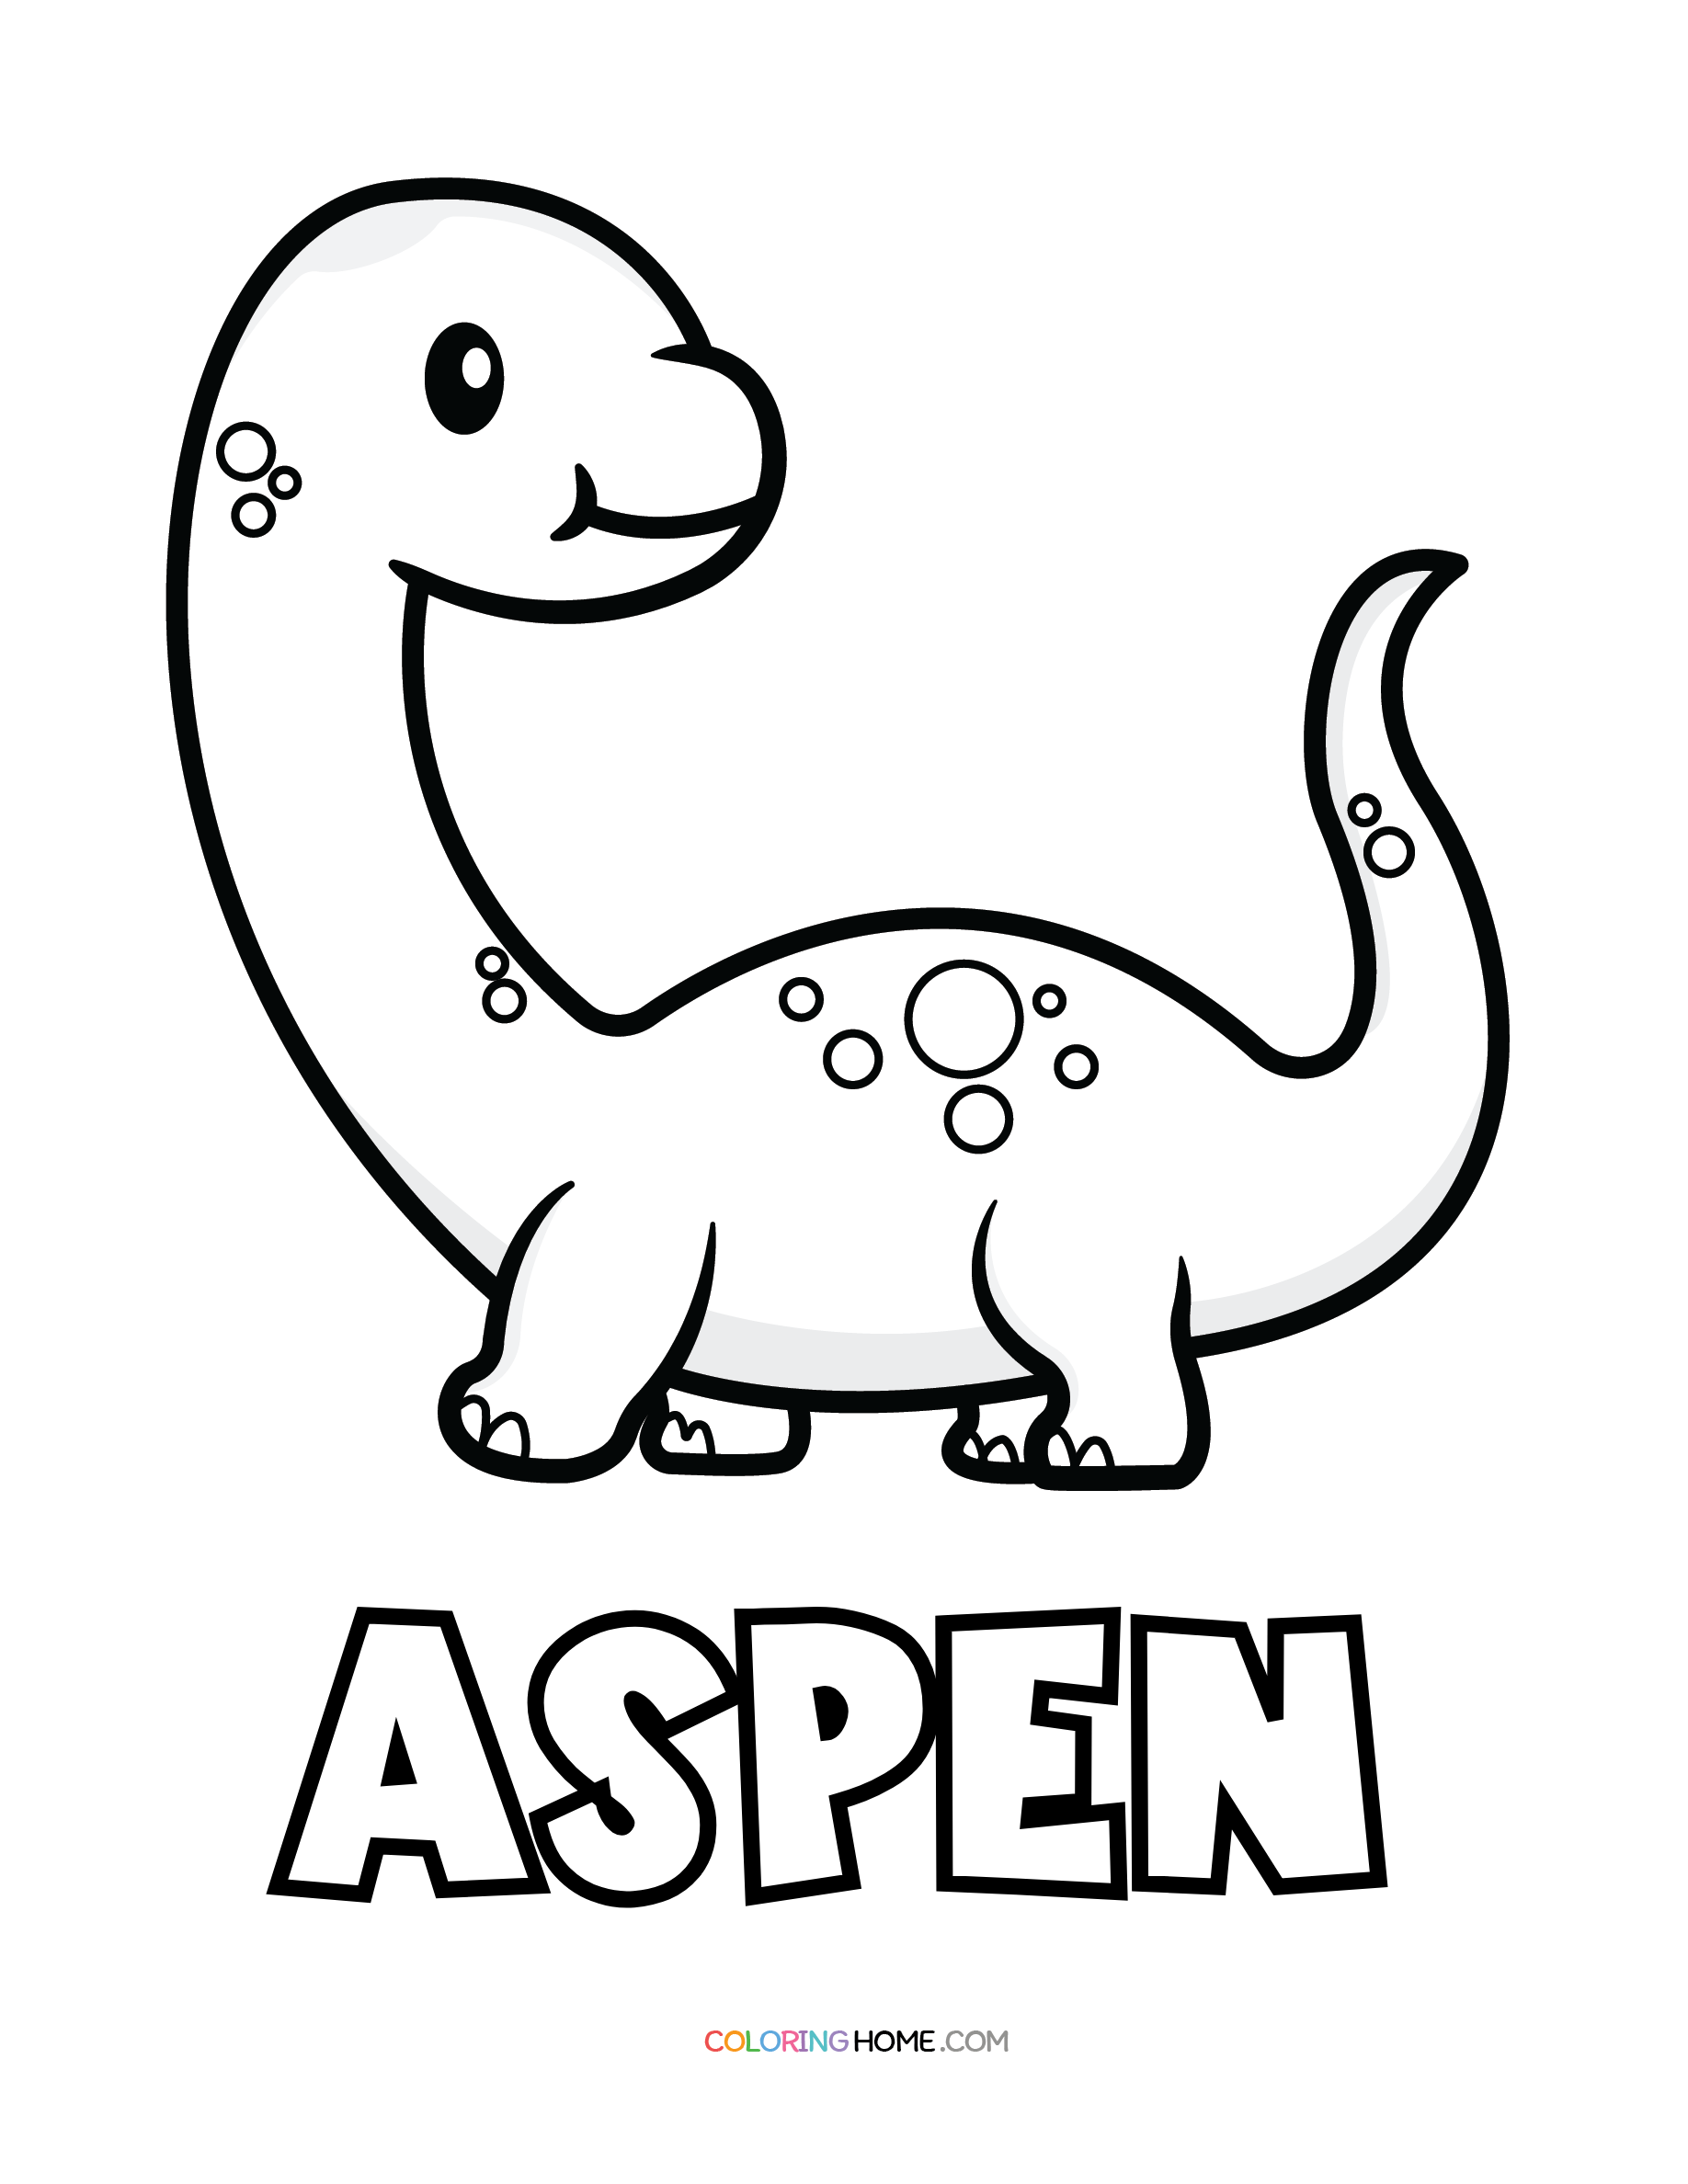 Aspen dinosaur coloring page